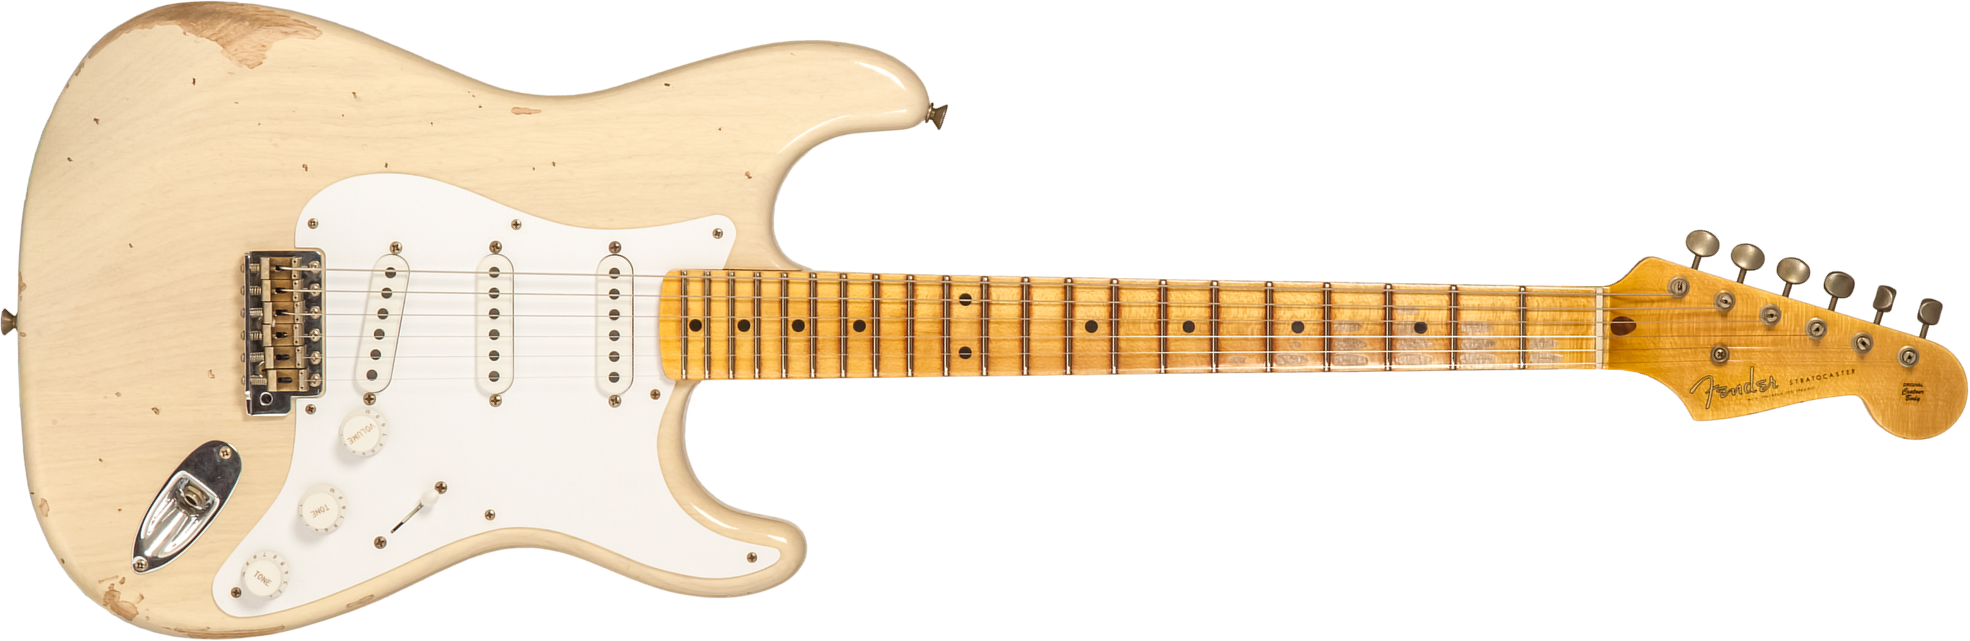 Fender Custom Shop Strat 1954 70th Anniv. 3s Trem Mn #xn4342 - Relic Vintage Blonde - Str shape electric guitar - Main picture